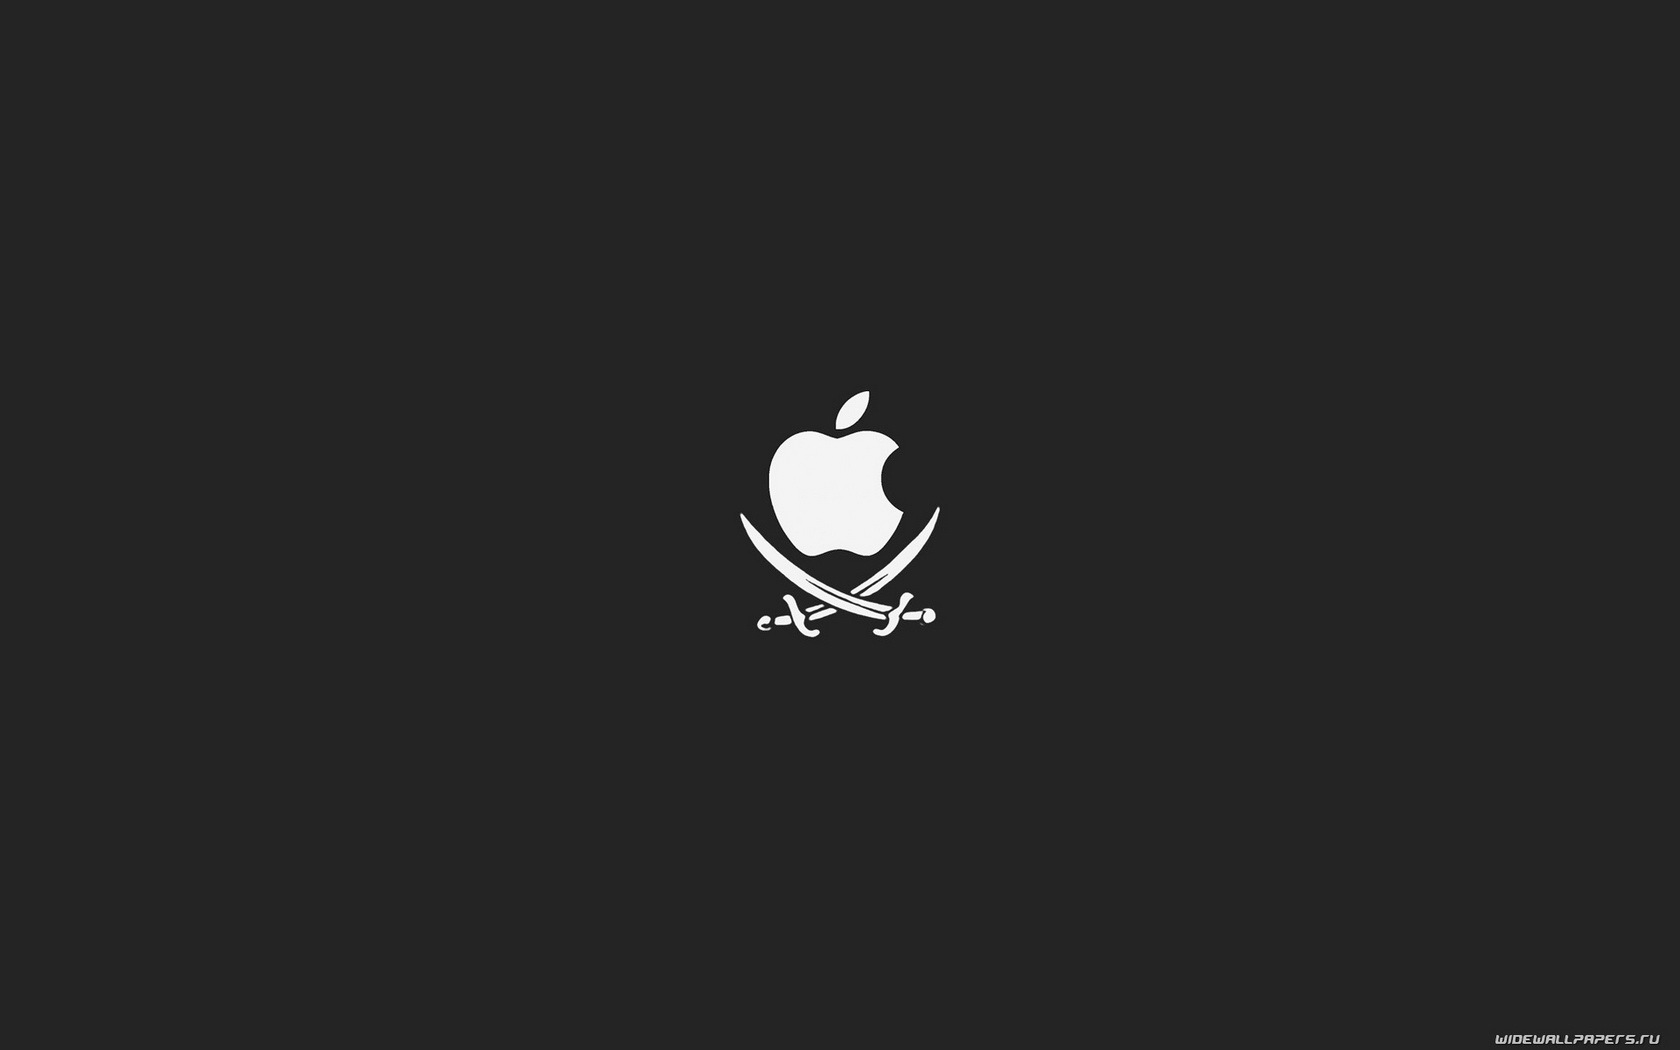 63 descargar imagen marcas, logos, manzana, piratas, negro: fondos de pantalla y protectores de pantalla gratis